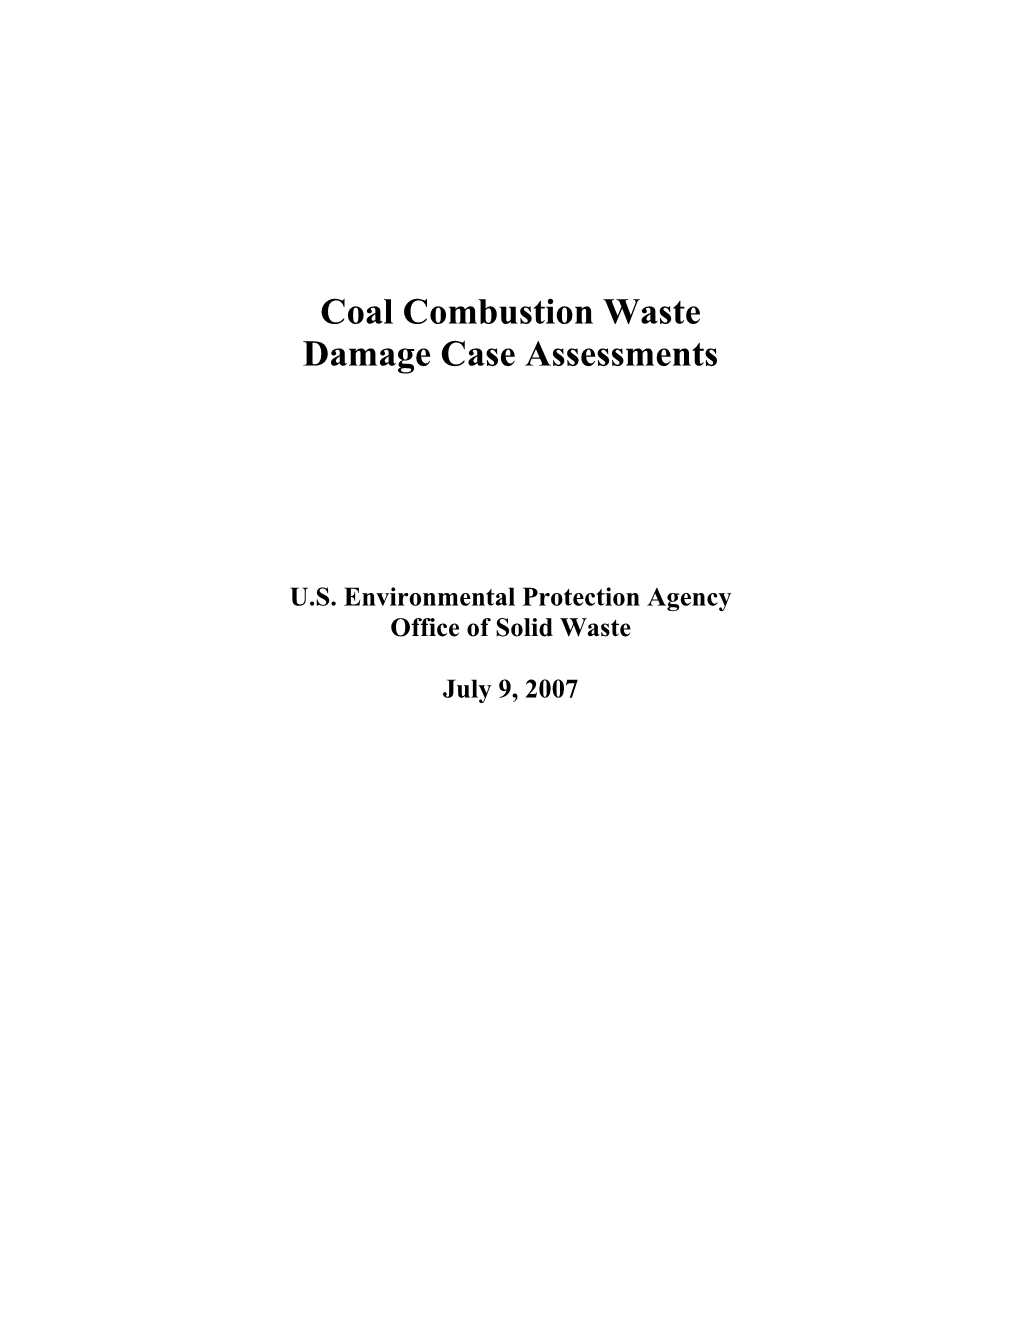 Coal Combustion Waste Damage Case Assessments